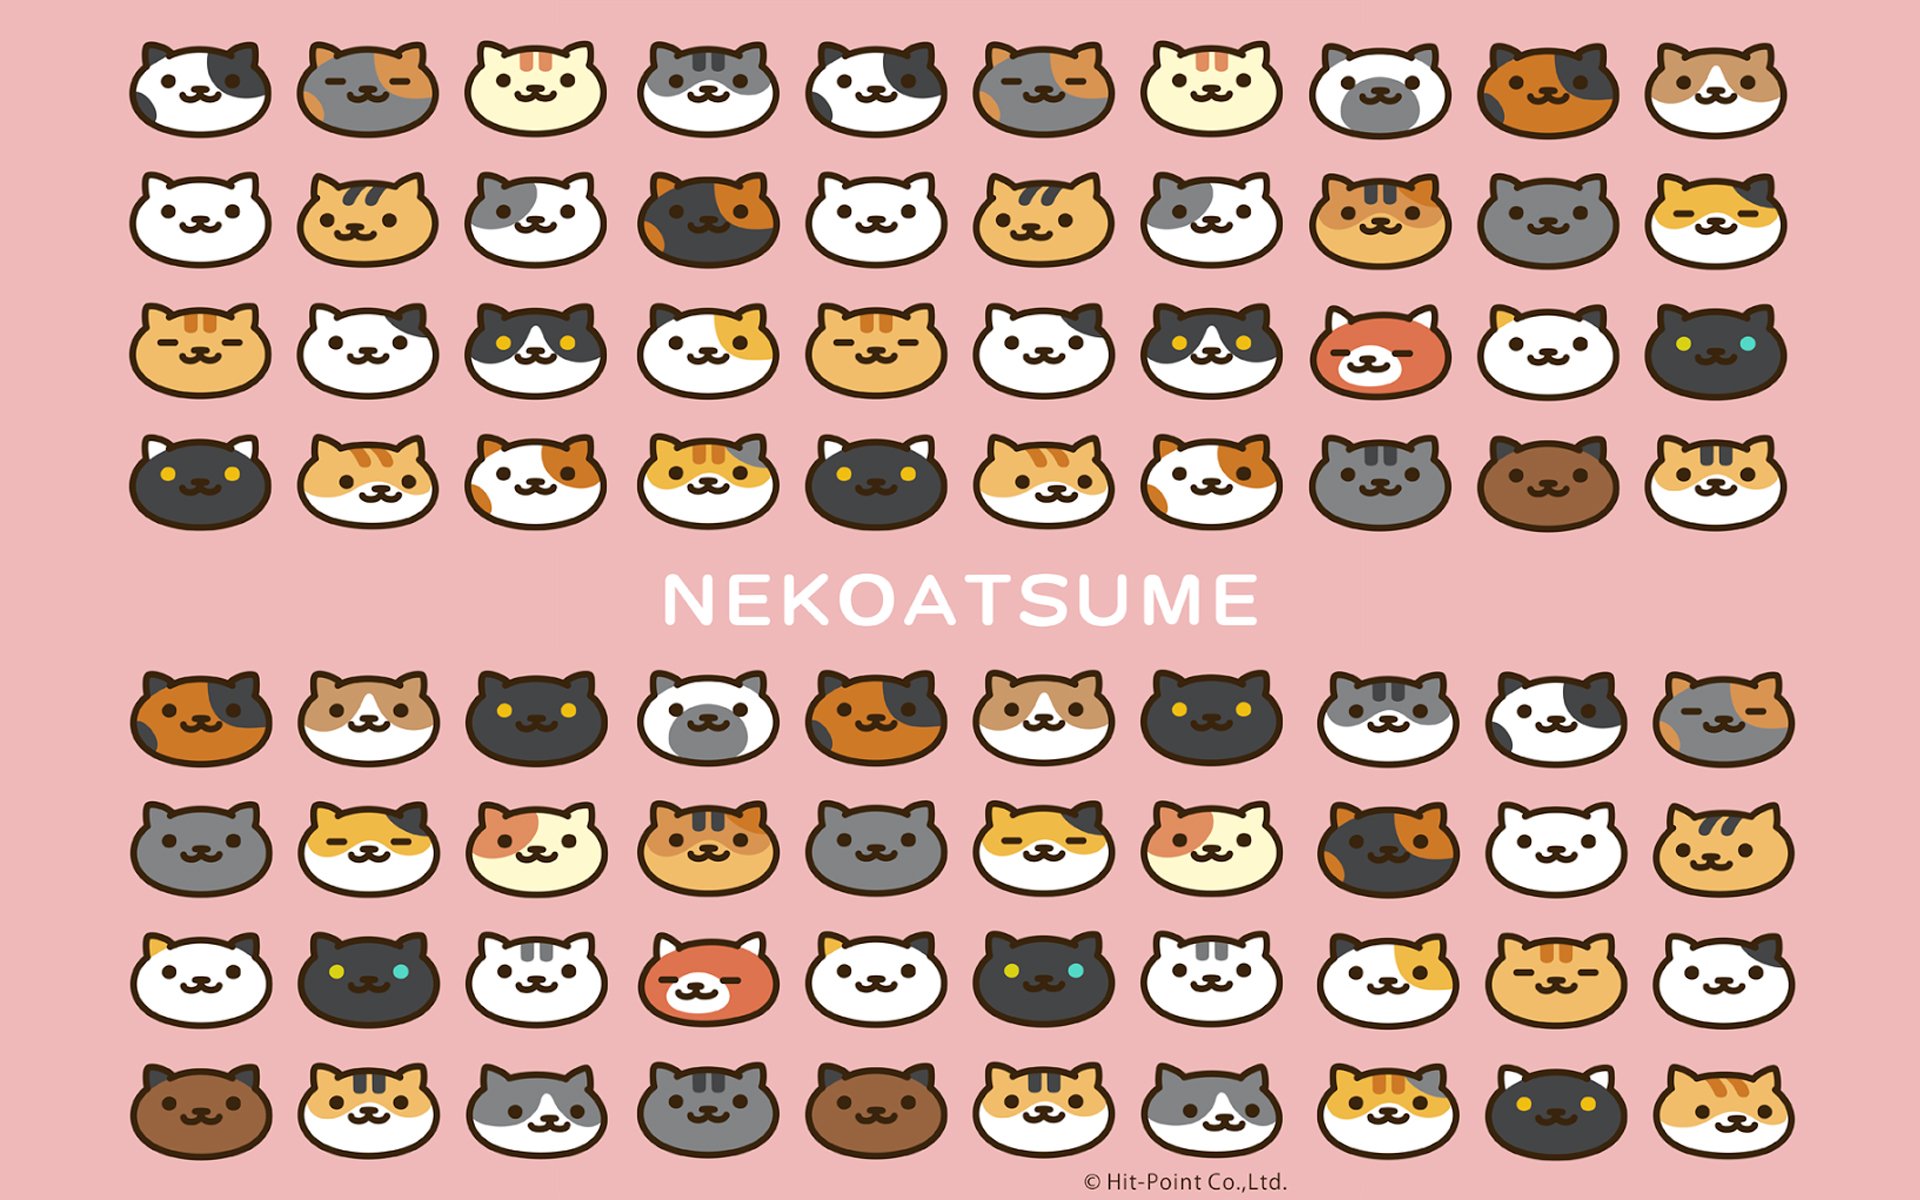 Neko Atsume Wallpapers